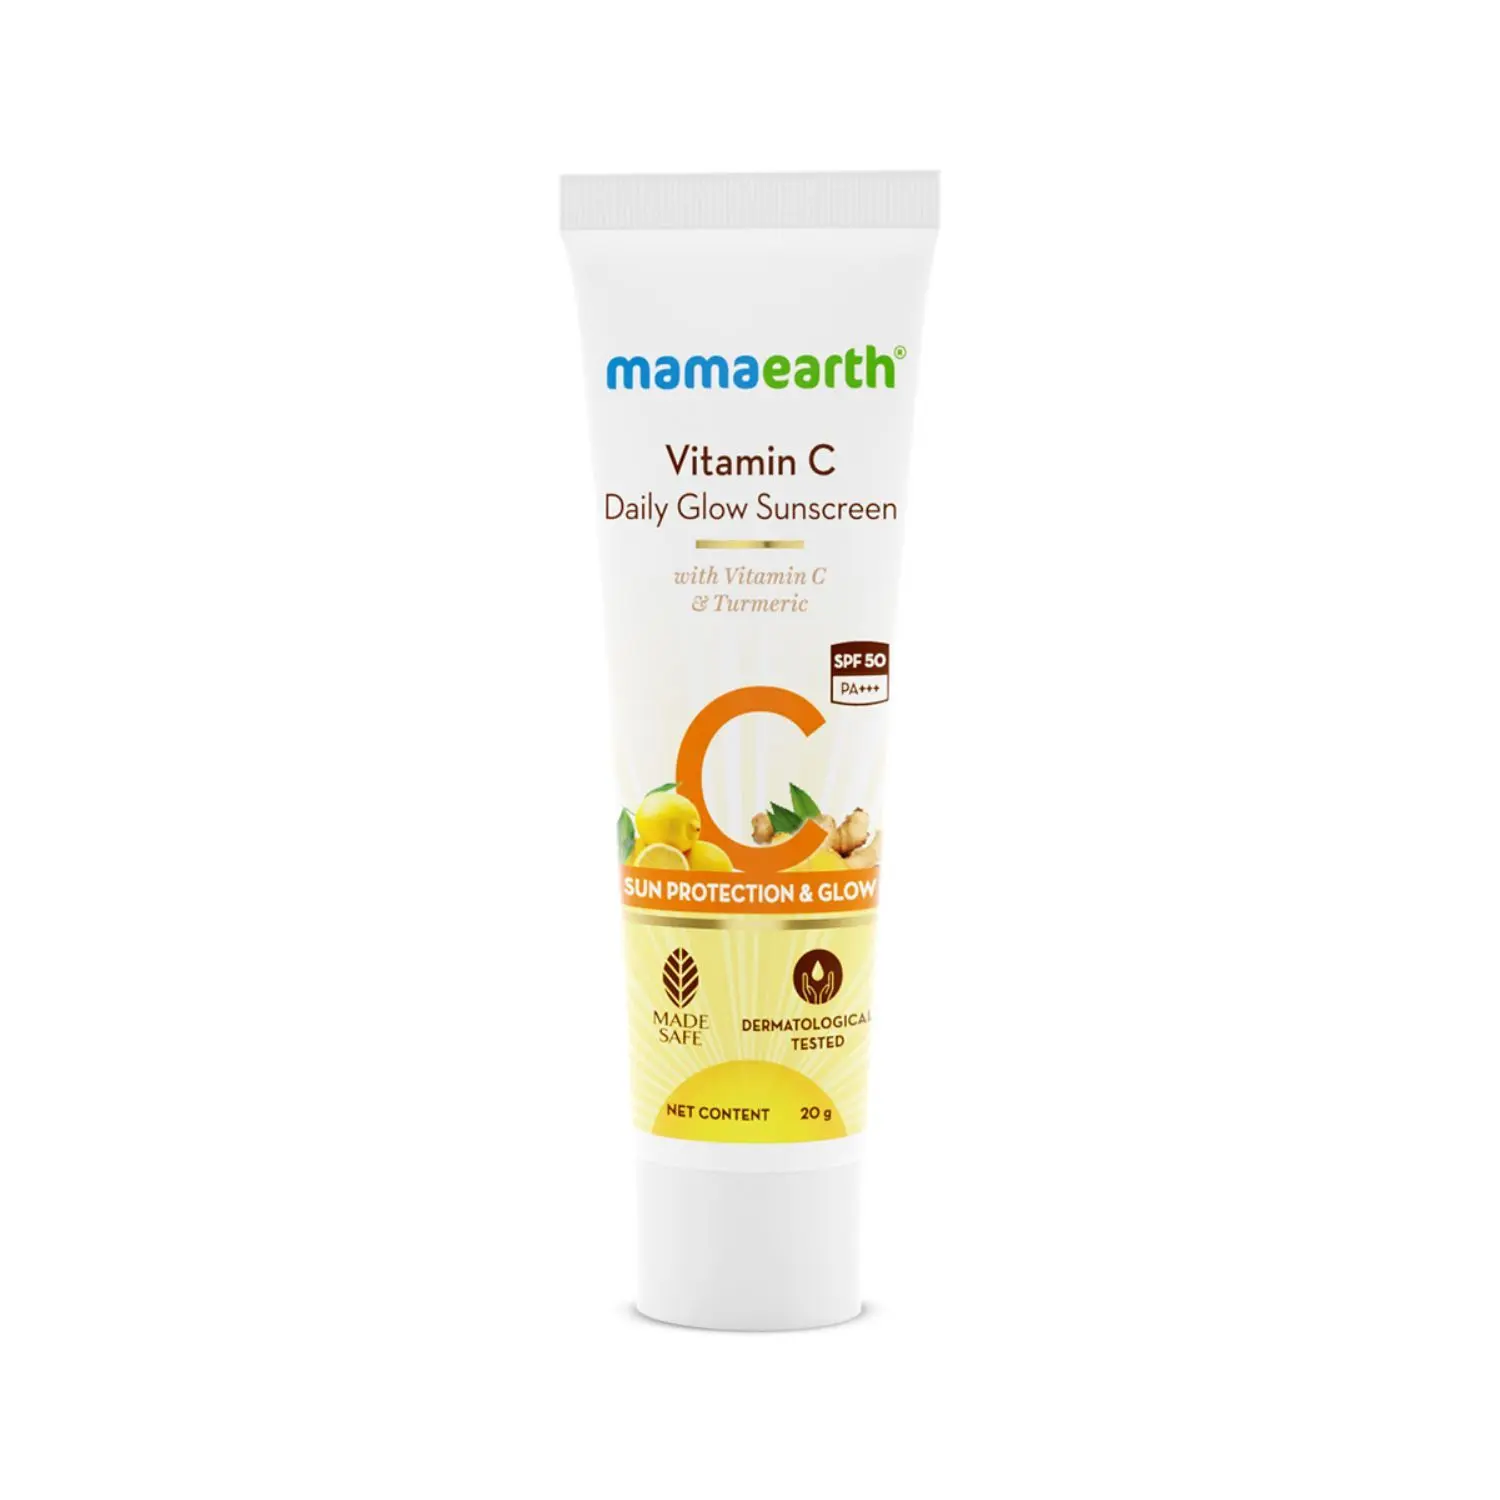 Mamaearth Vitamin C Daily Glow Sunscreen with Vitamin C & Turmeric for Sun Protection & Glow - 20 g